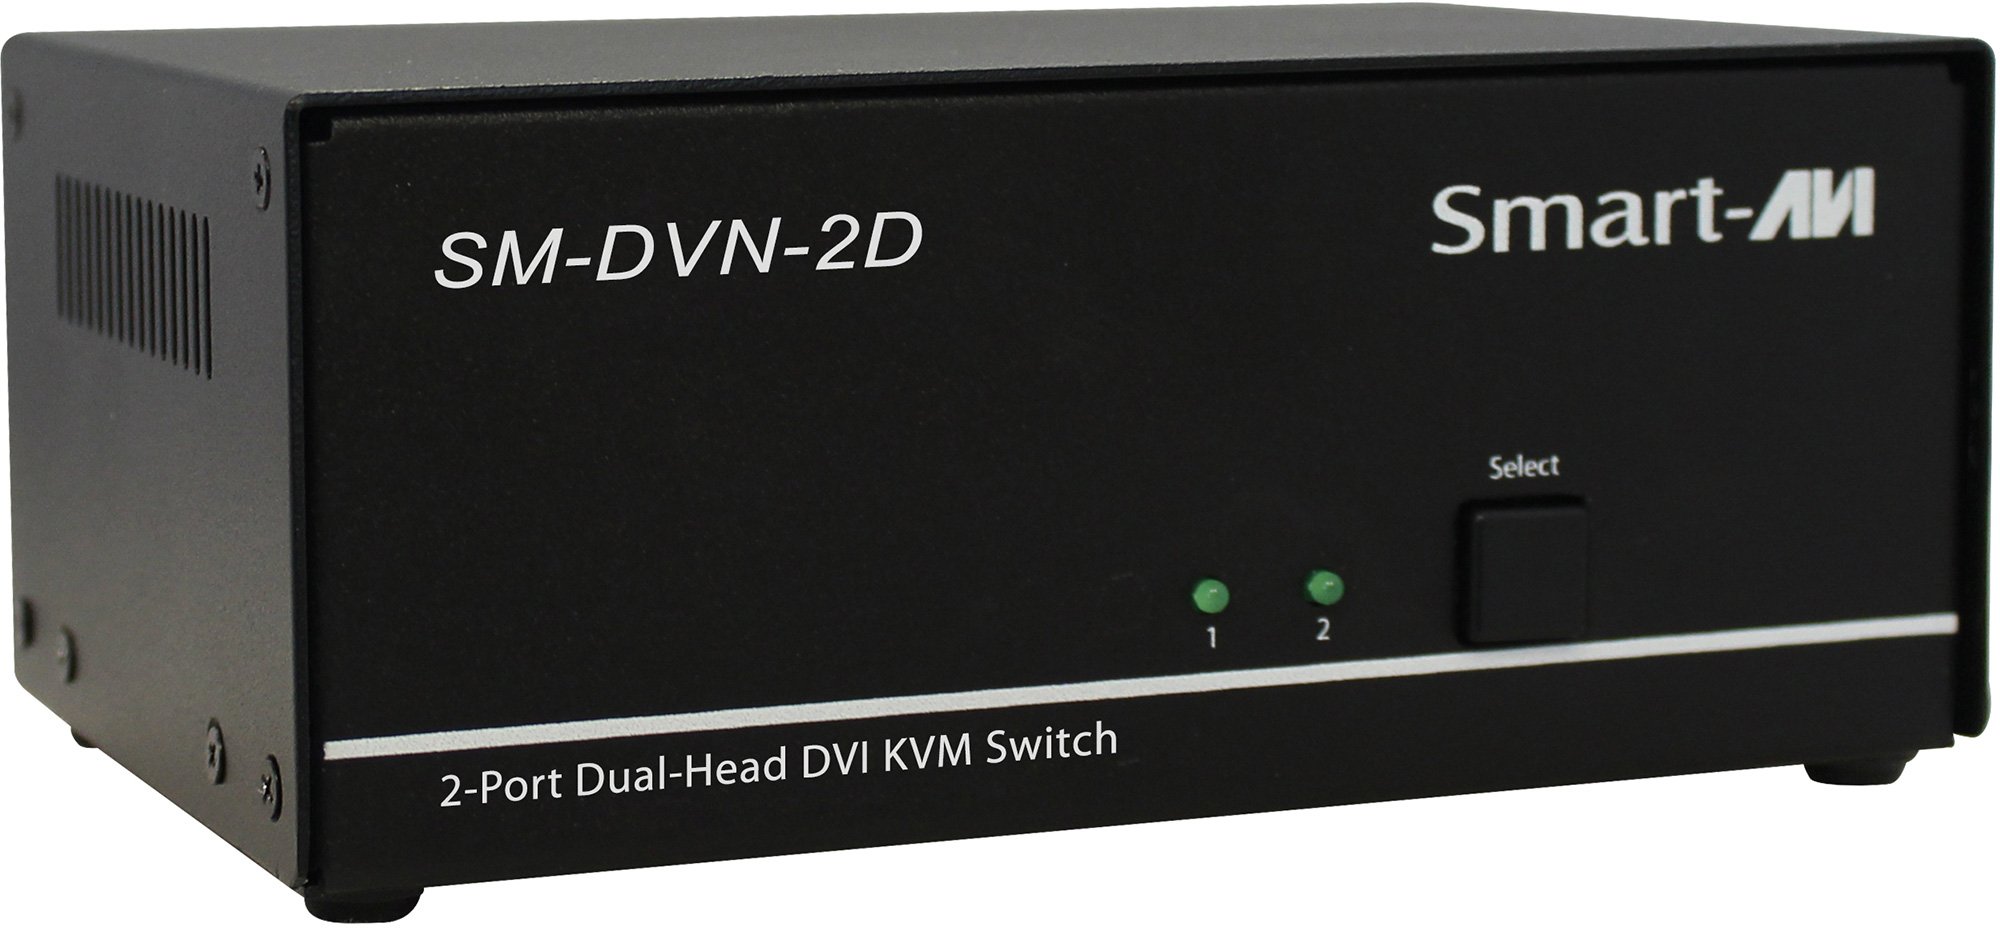 Smart AVI SM-DVN-2D Dual Head DVI-I Dual Link KVM Switch with Audio and USB 2.0 Support - 2 Port SAVI-SM-DVN-2D